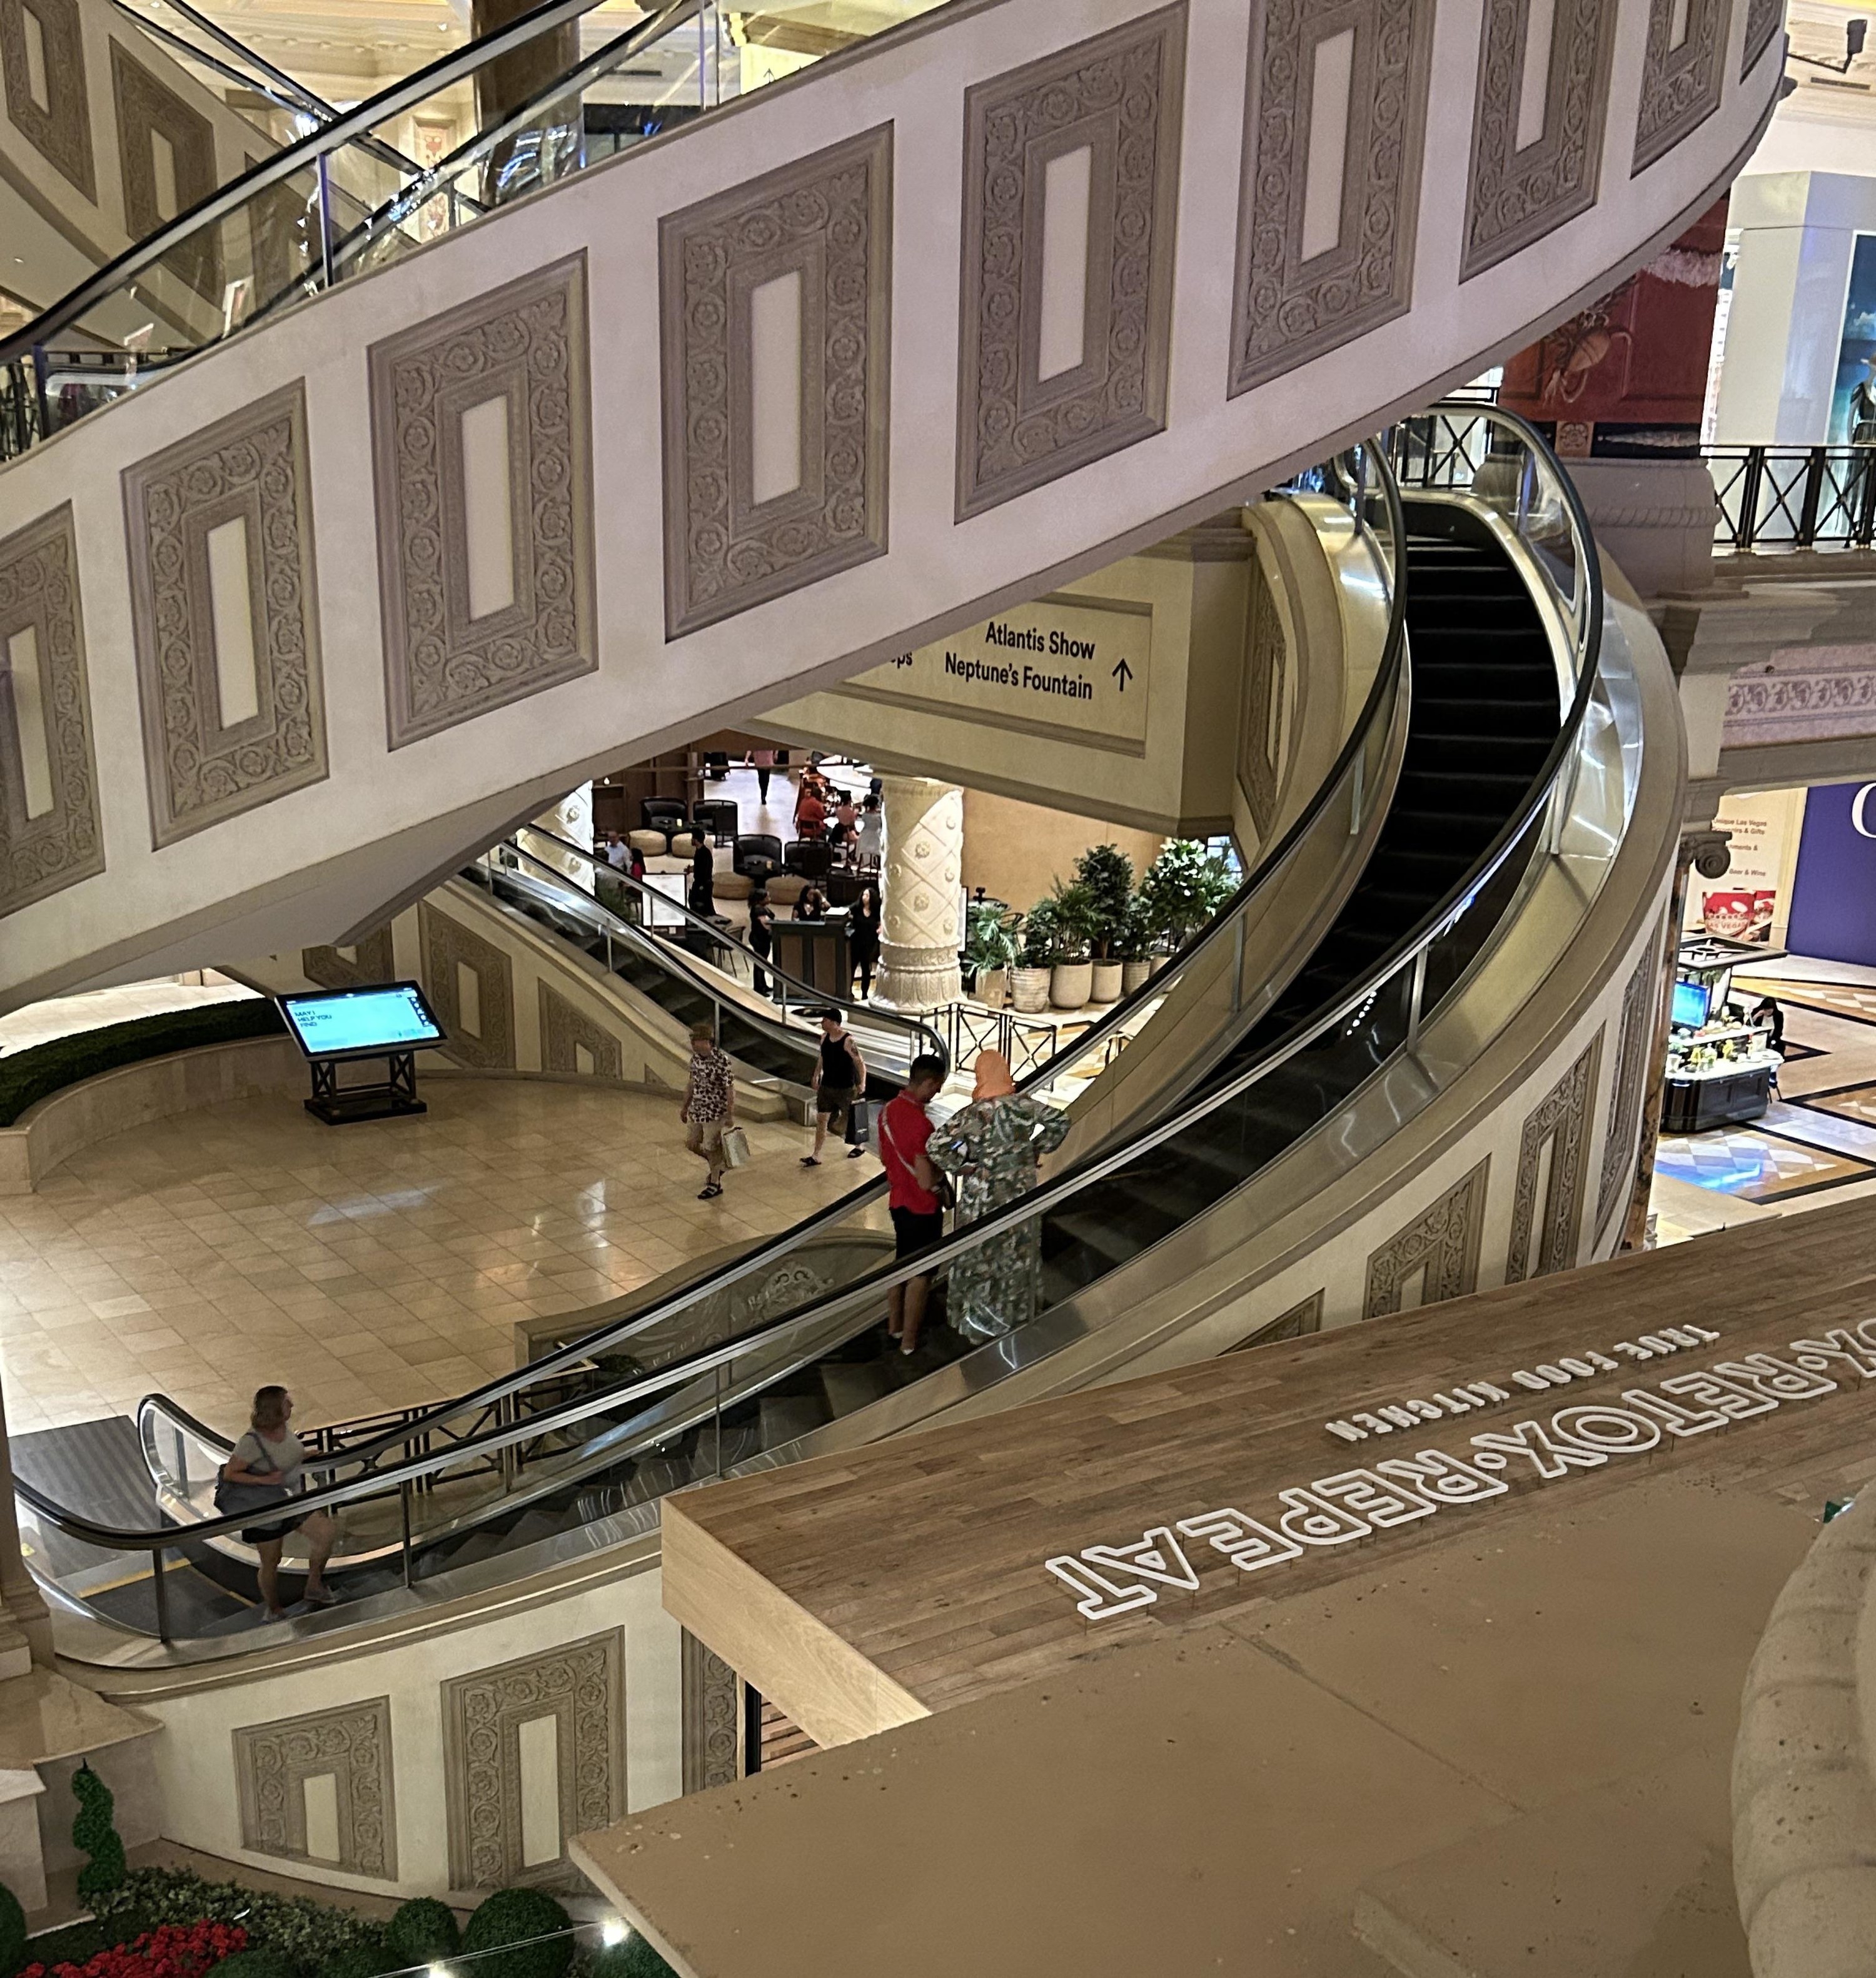 A curved escalator